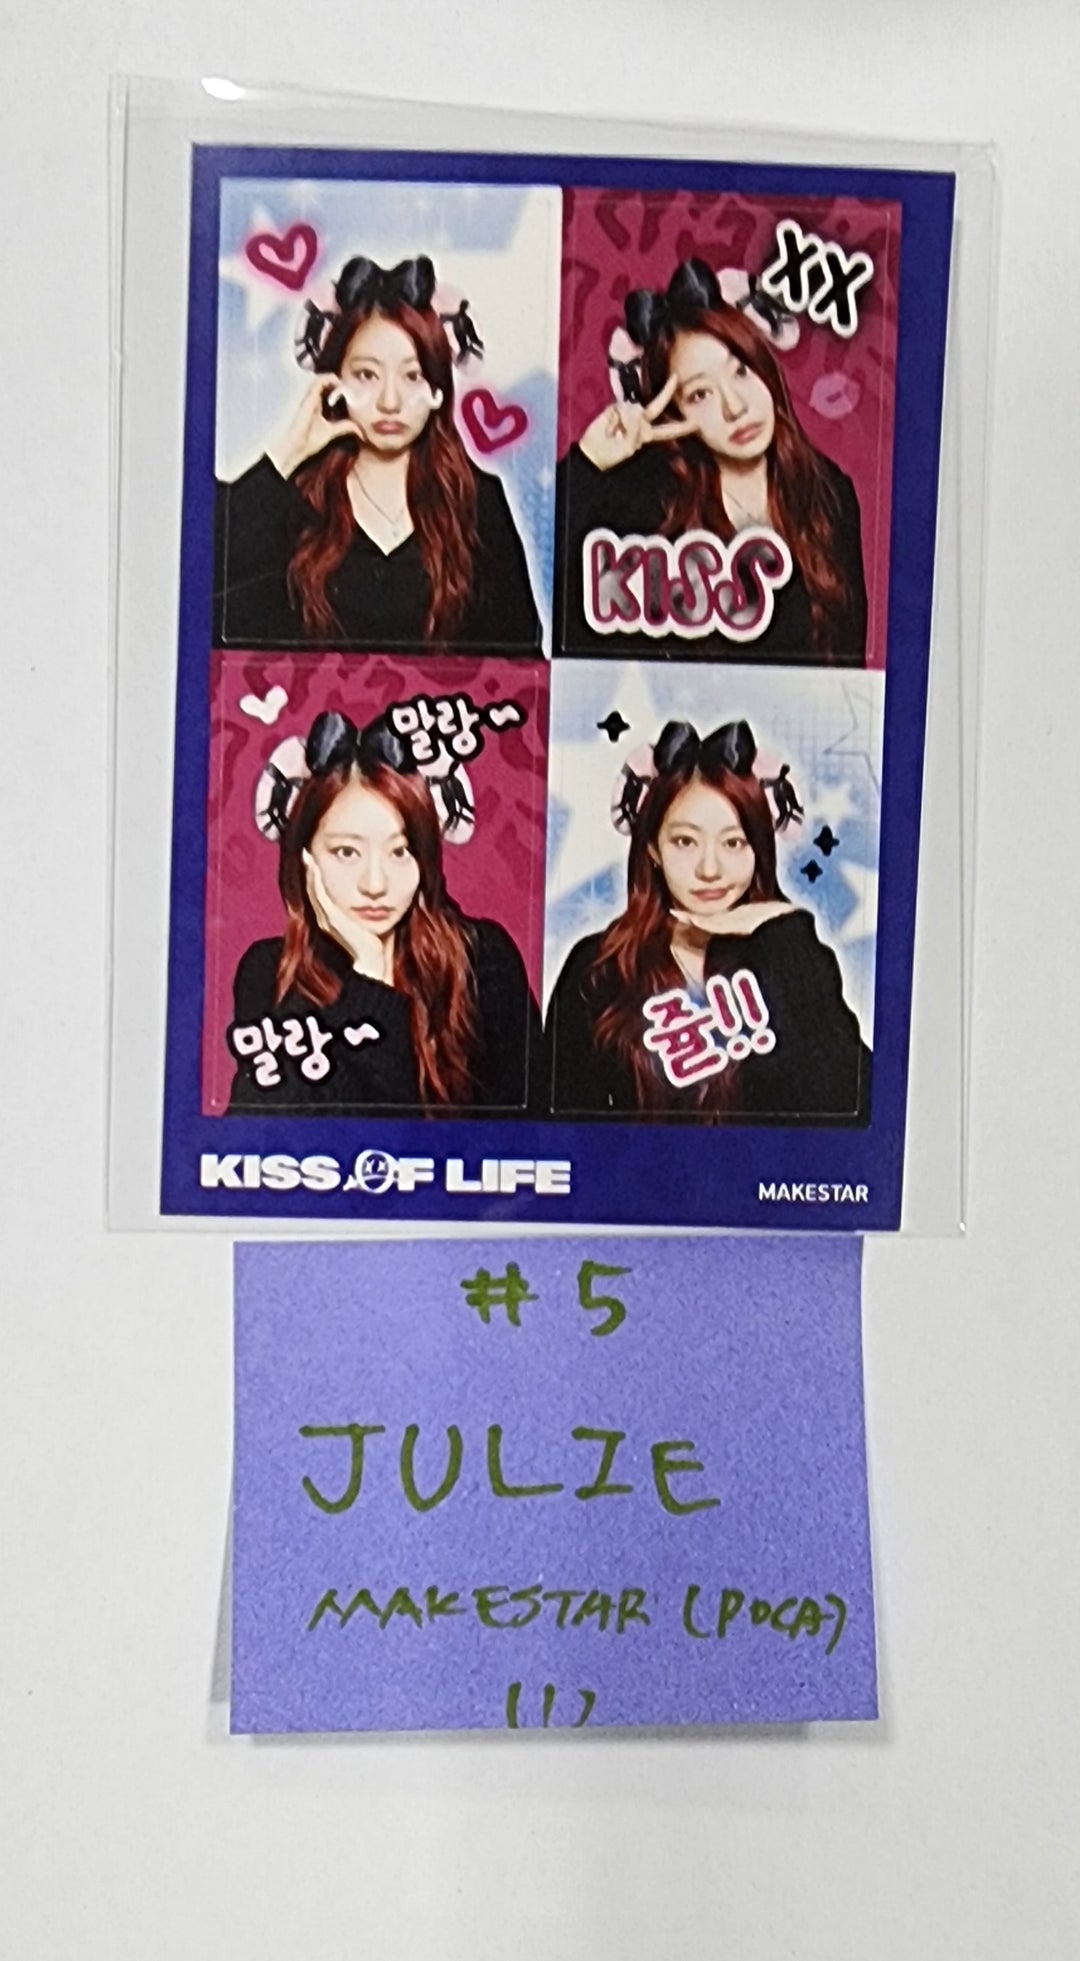 KISS OF LIFE "Born to be XX" - Makestar Fansign Event Photocard, Sticker [Poca Album] (2) [23.12.11]